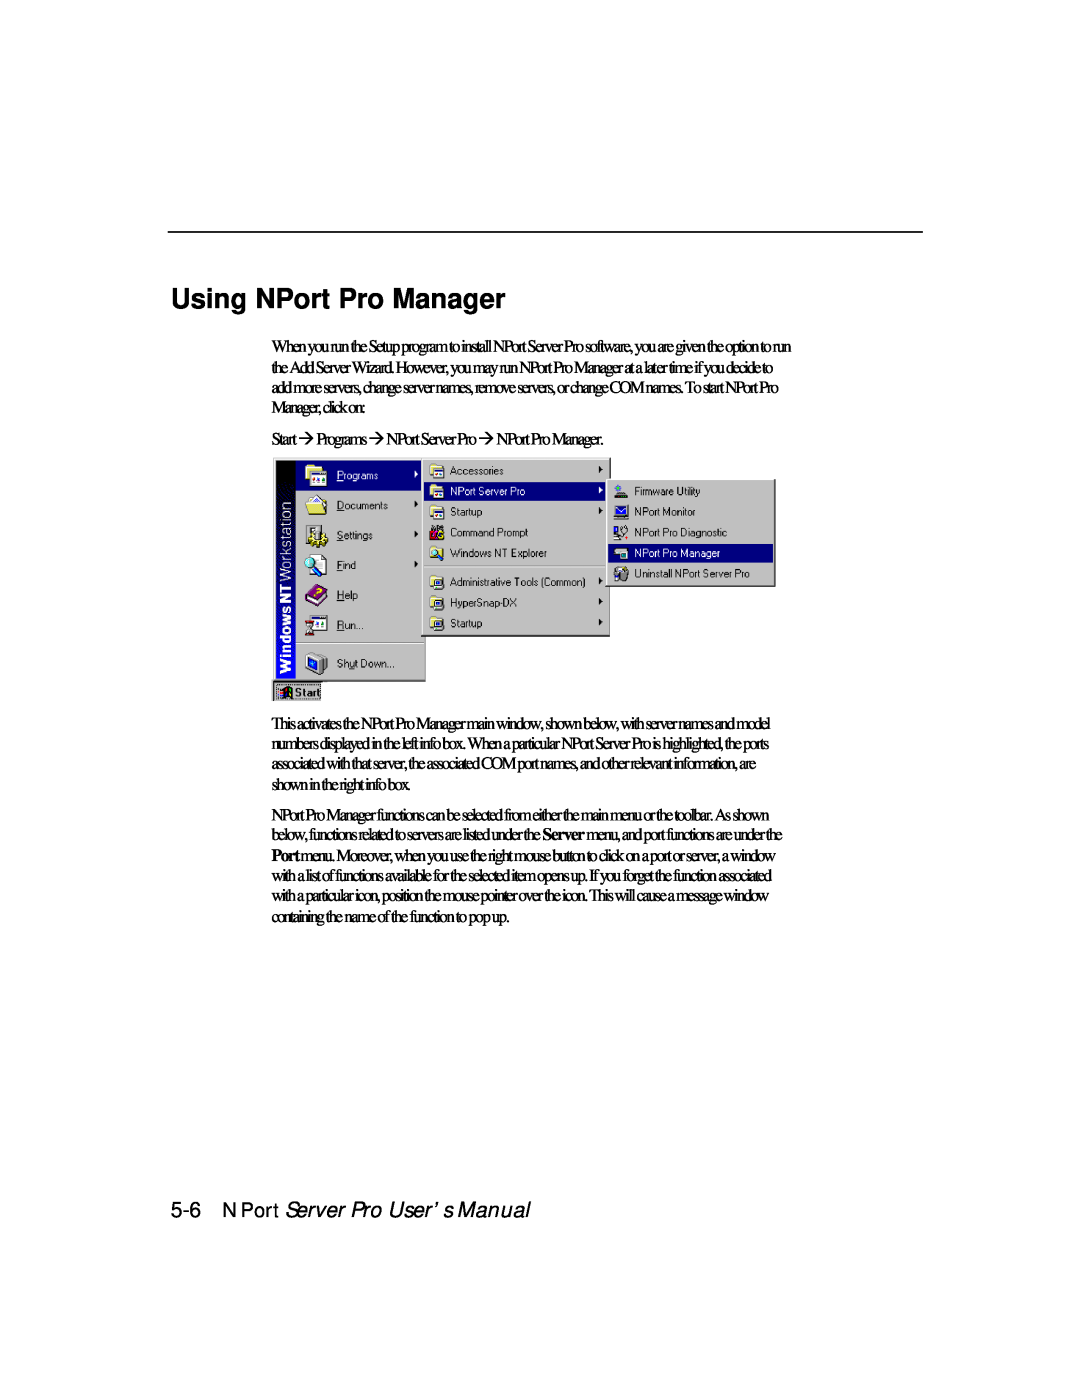 Moxa Technologies DE-303, DE-308 manual NPort Server Pro User’s Manual, Using NPort Pro Manager 